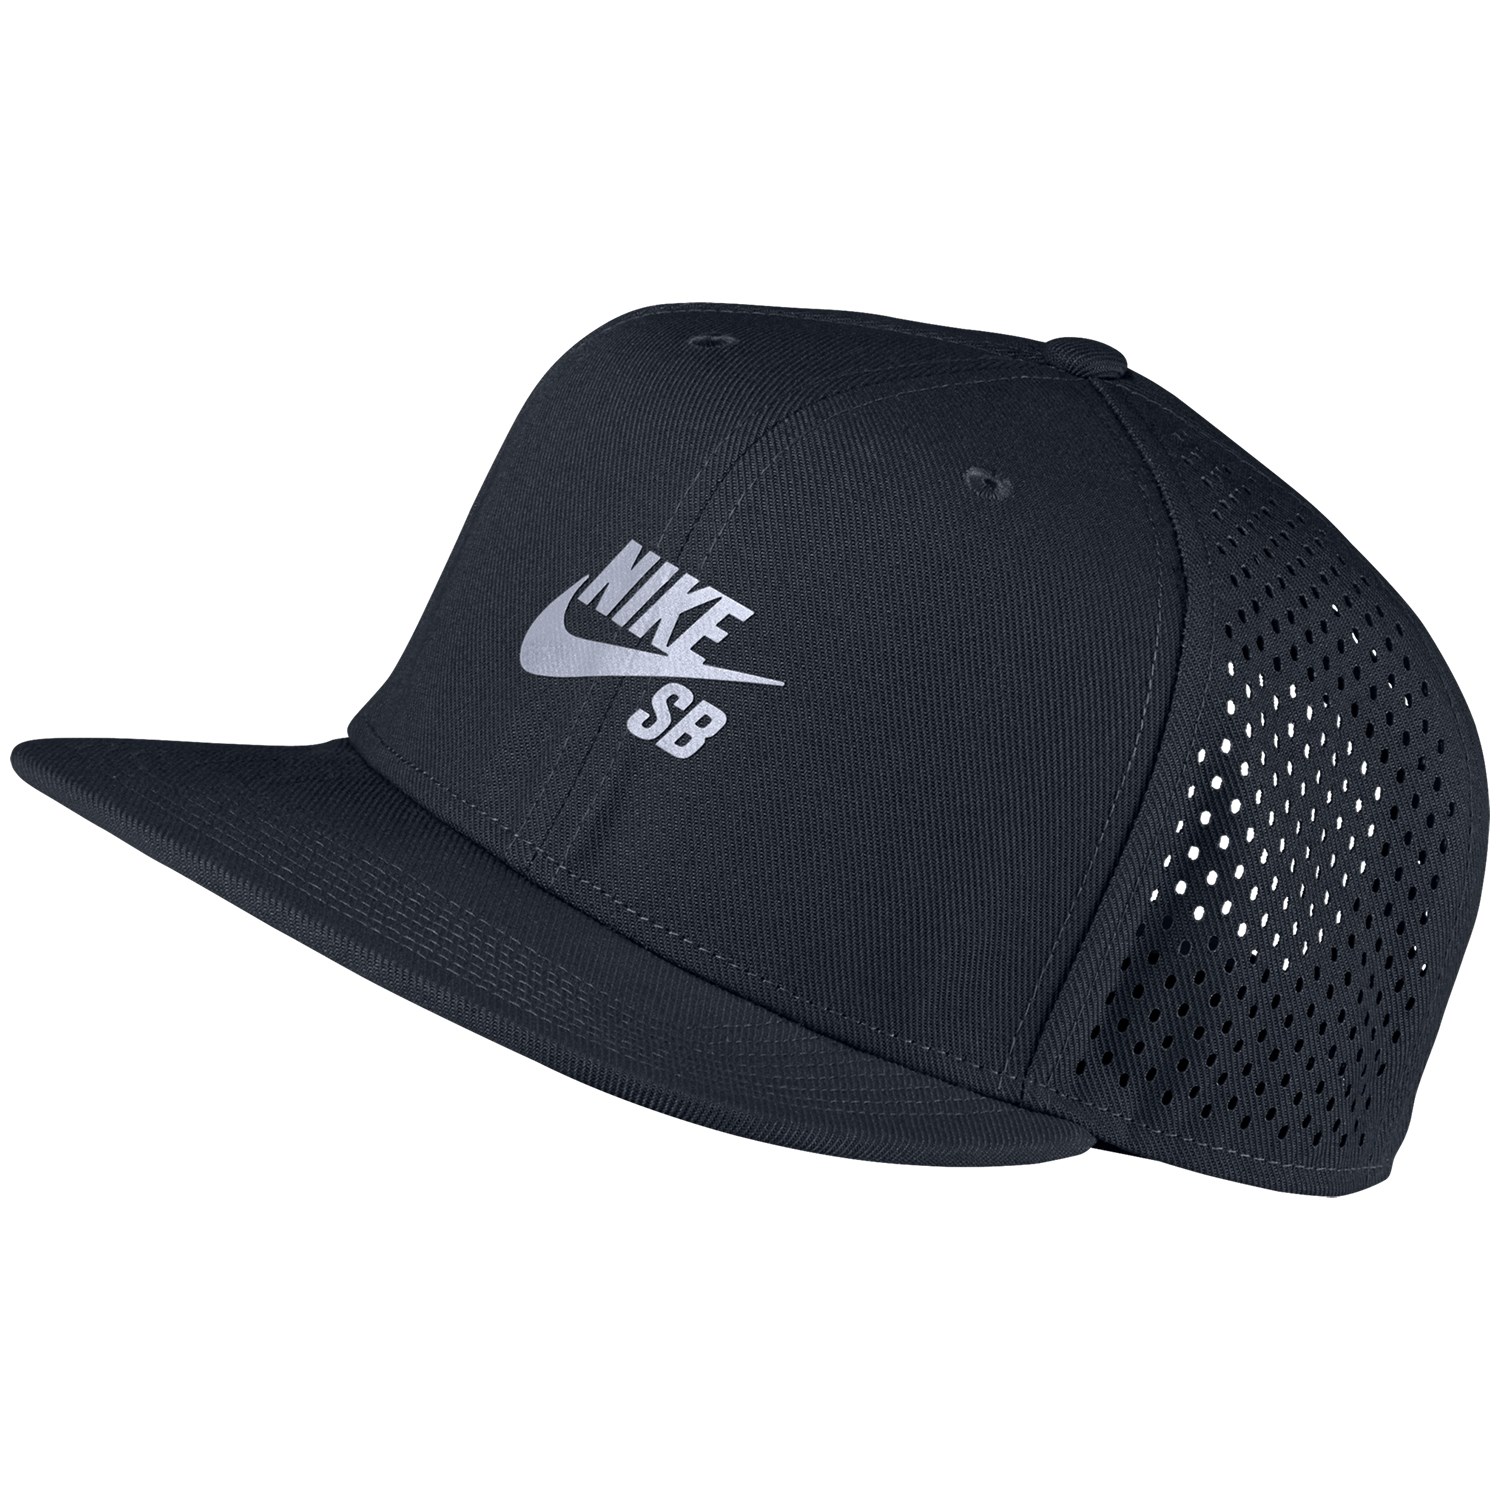 eficacia Rebajar Soberano Nike SB Performance Trucker Hat | evo